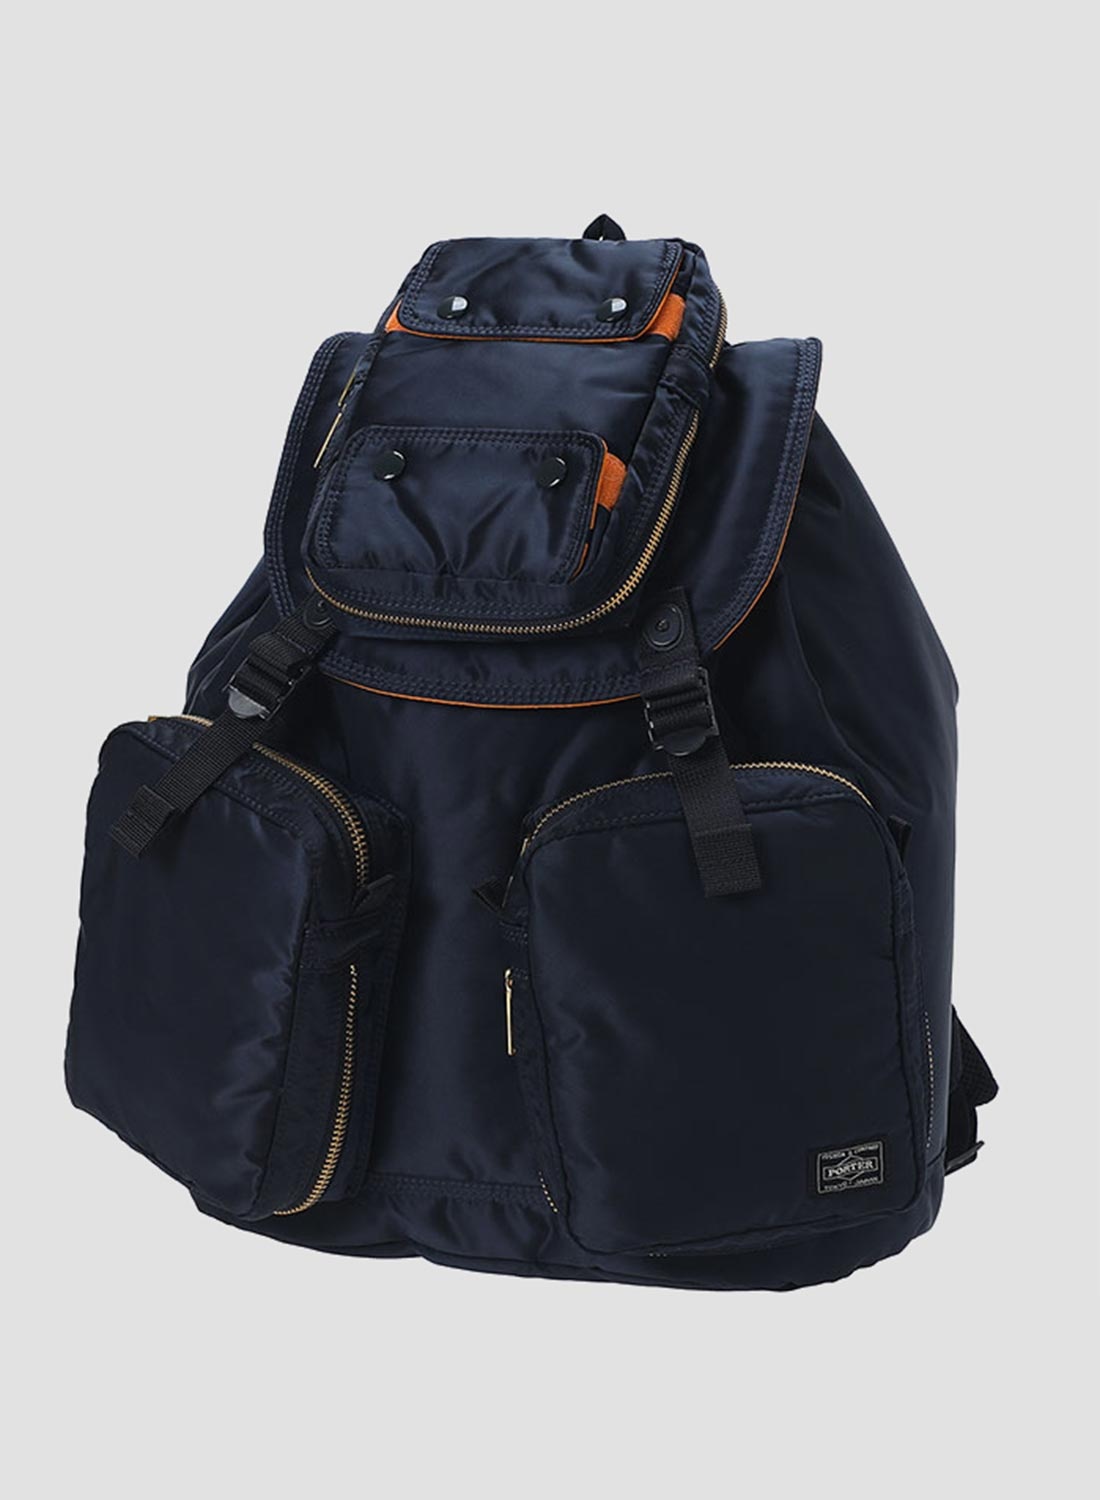 Porter-Yoshida & Co Tanker Backpack in Iron Blue - 1